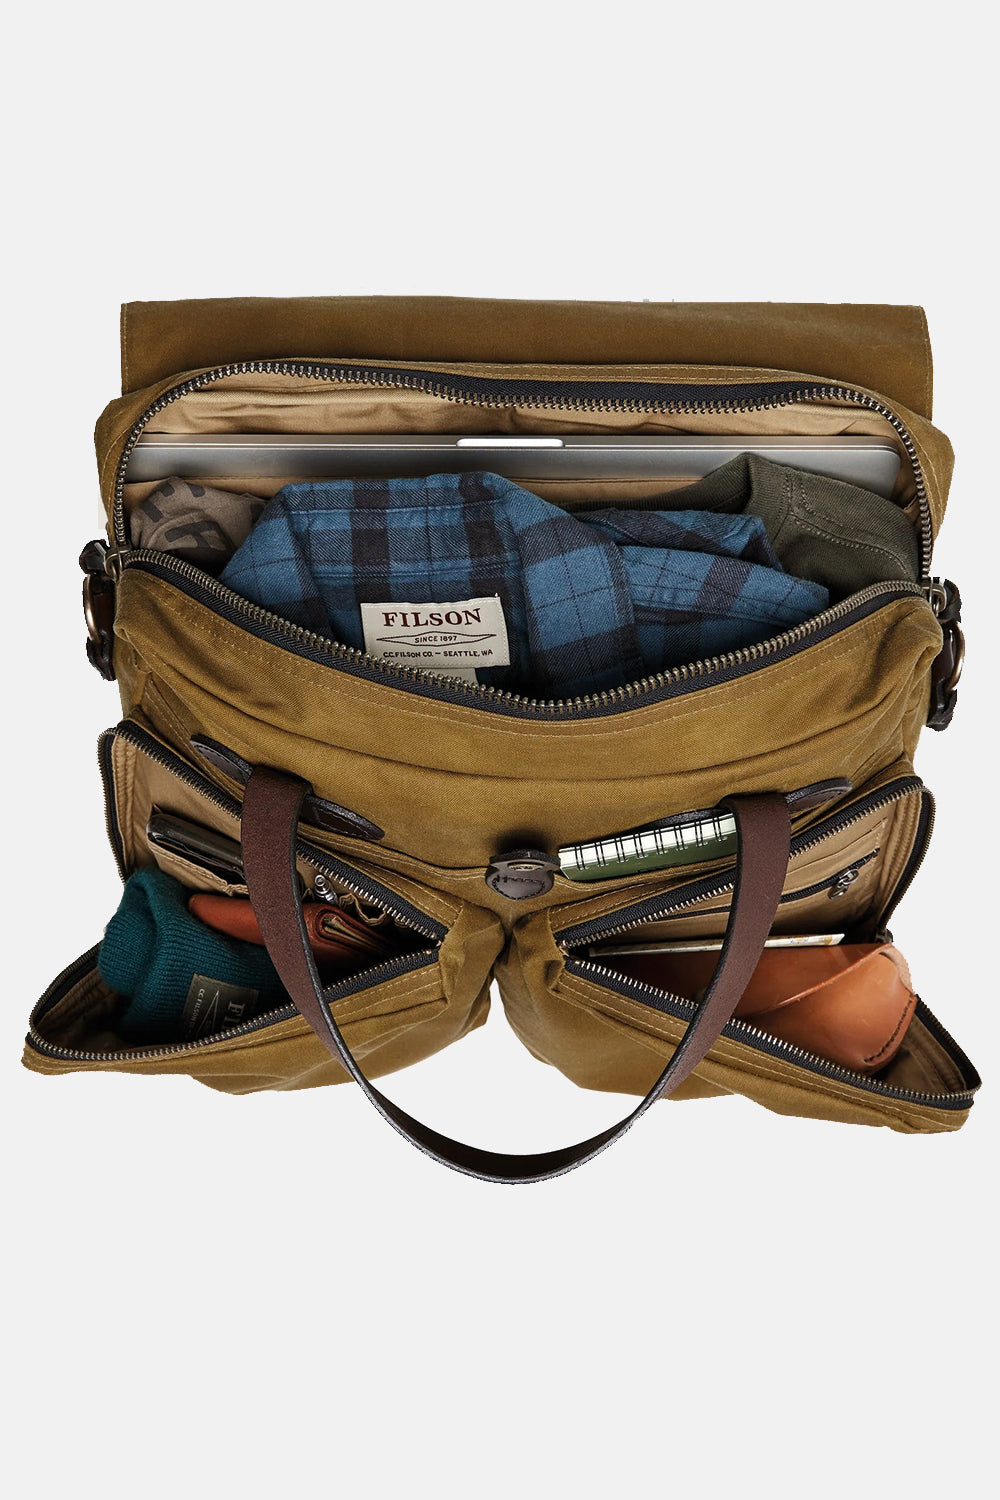 BestGO】Portable Bag Multifunction A4 Document Storage Bags Portable Oxford Cloth  Briefcase Storage Bag Organizer For Files Notebooks Pens Computer